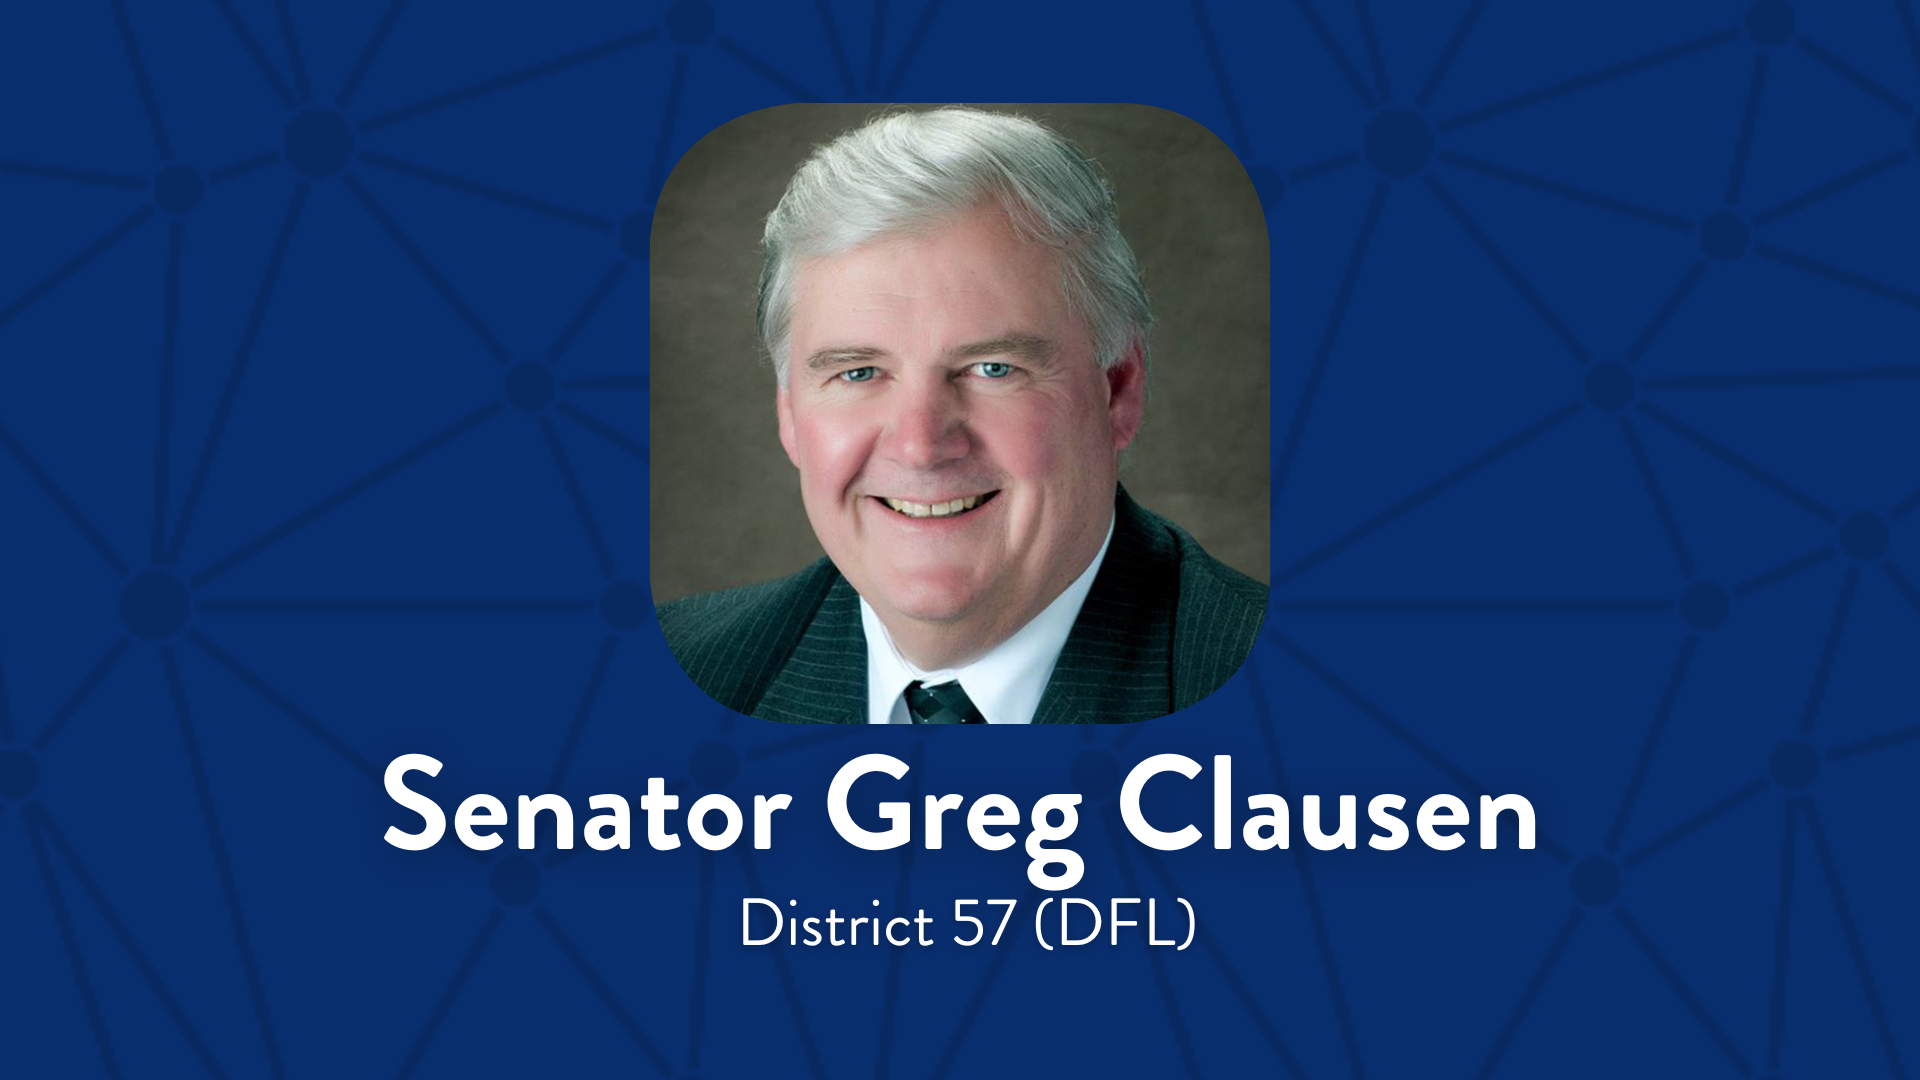 Senator Greg Clausen